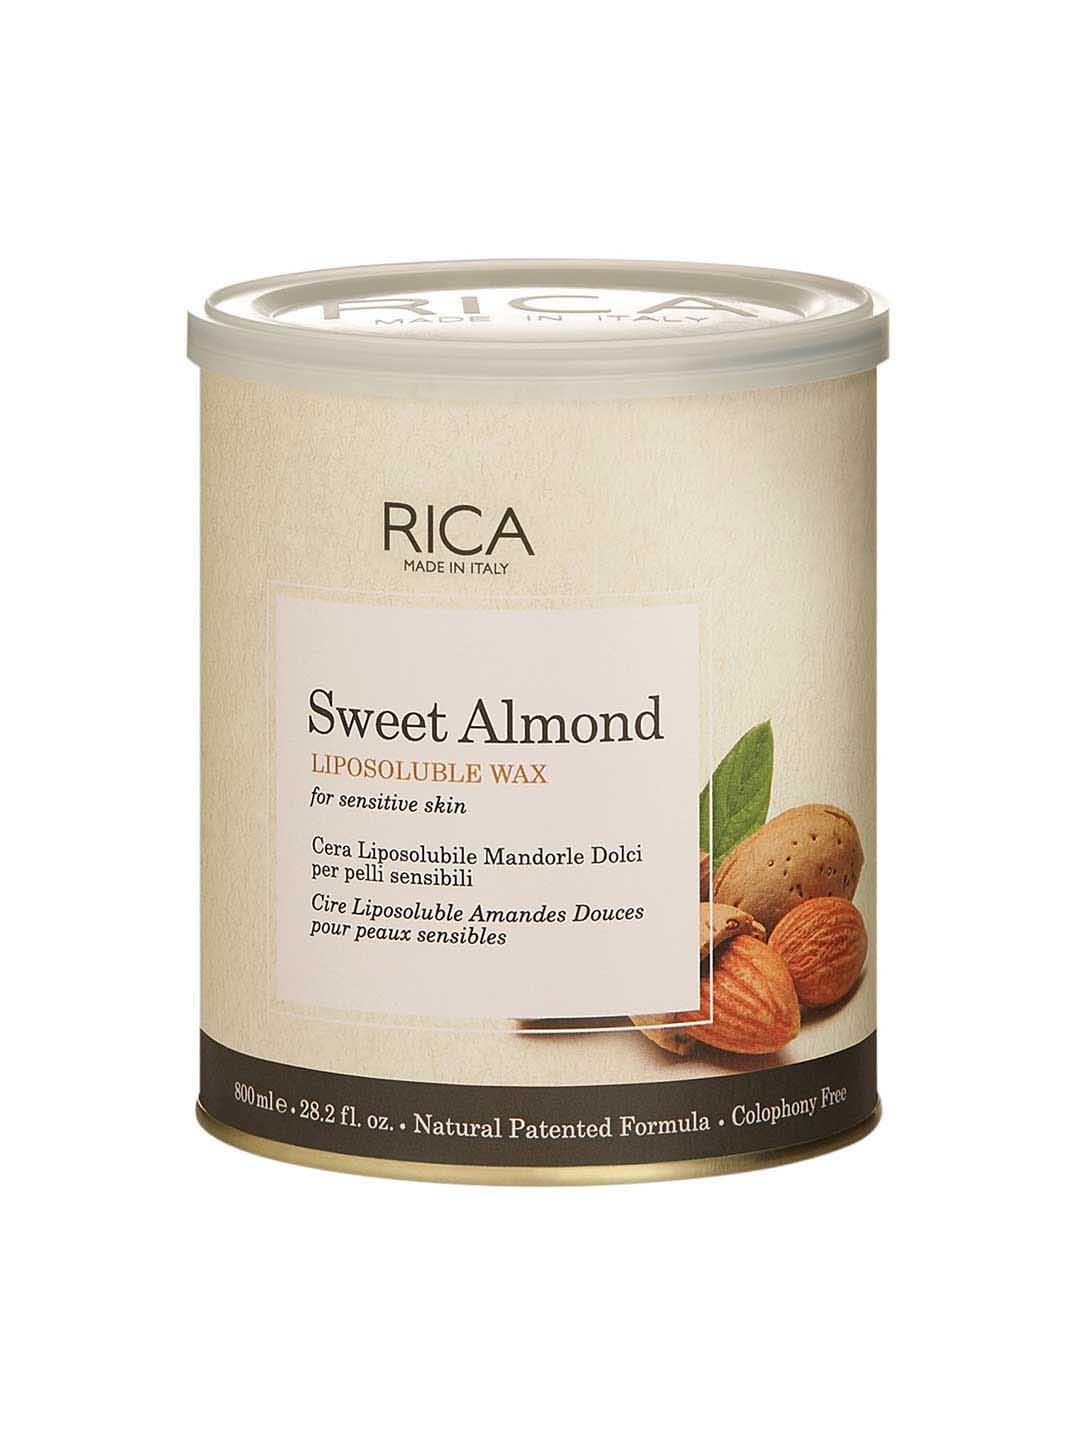 RICA Unisex Sweet Almond Liposoluble Wax